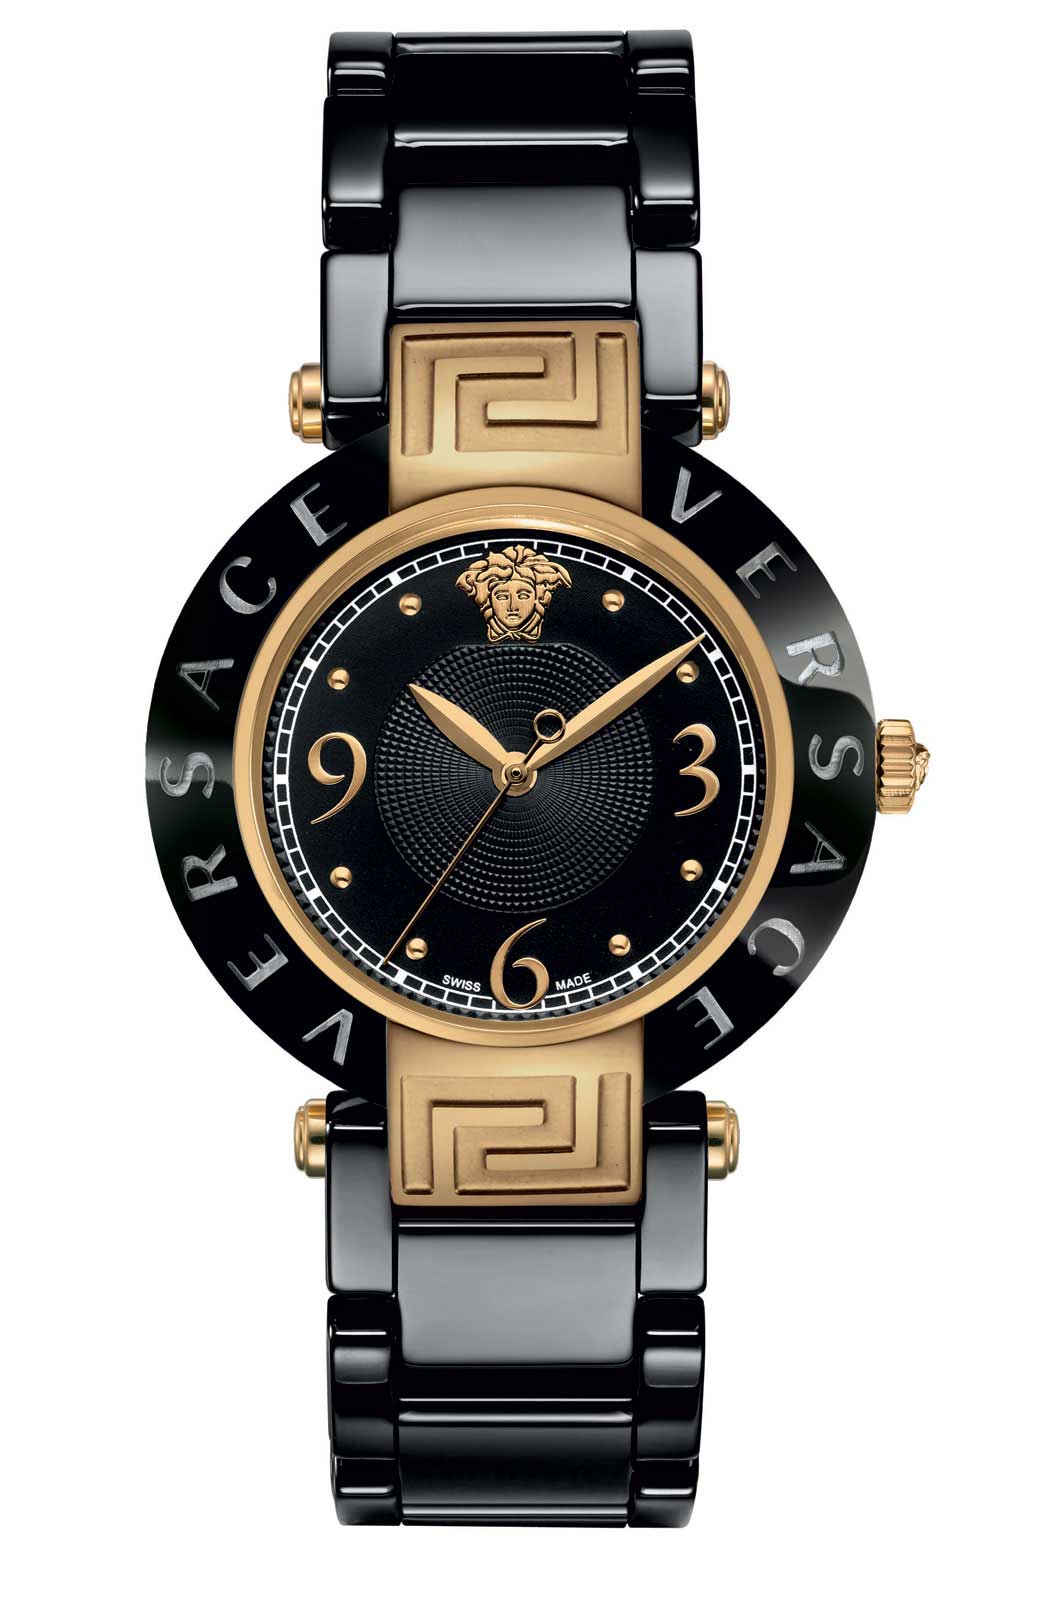 Versace QUARTZ watch 763 BLACK CERAMIC BRACELET